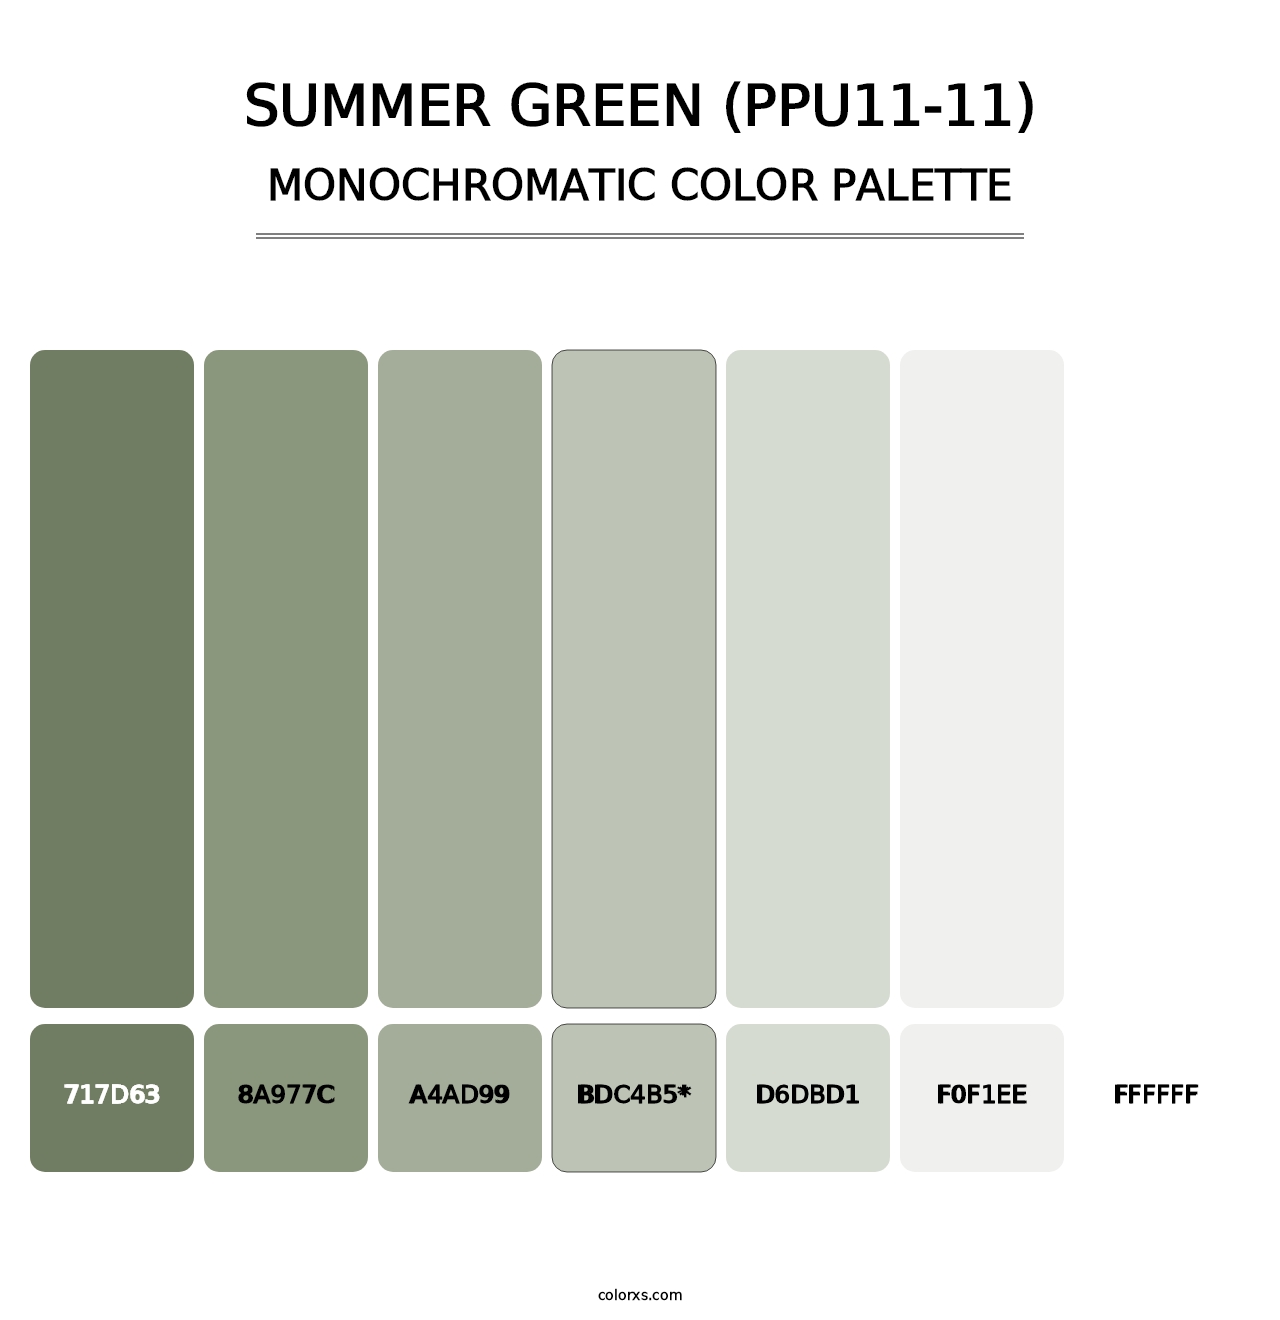 Summer Green (PPU11-11) - Monochromatic Color Palette